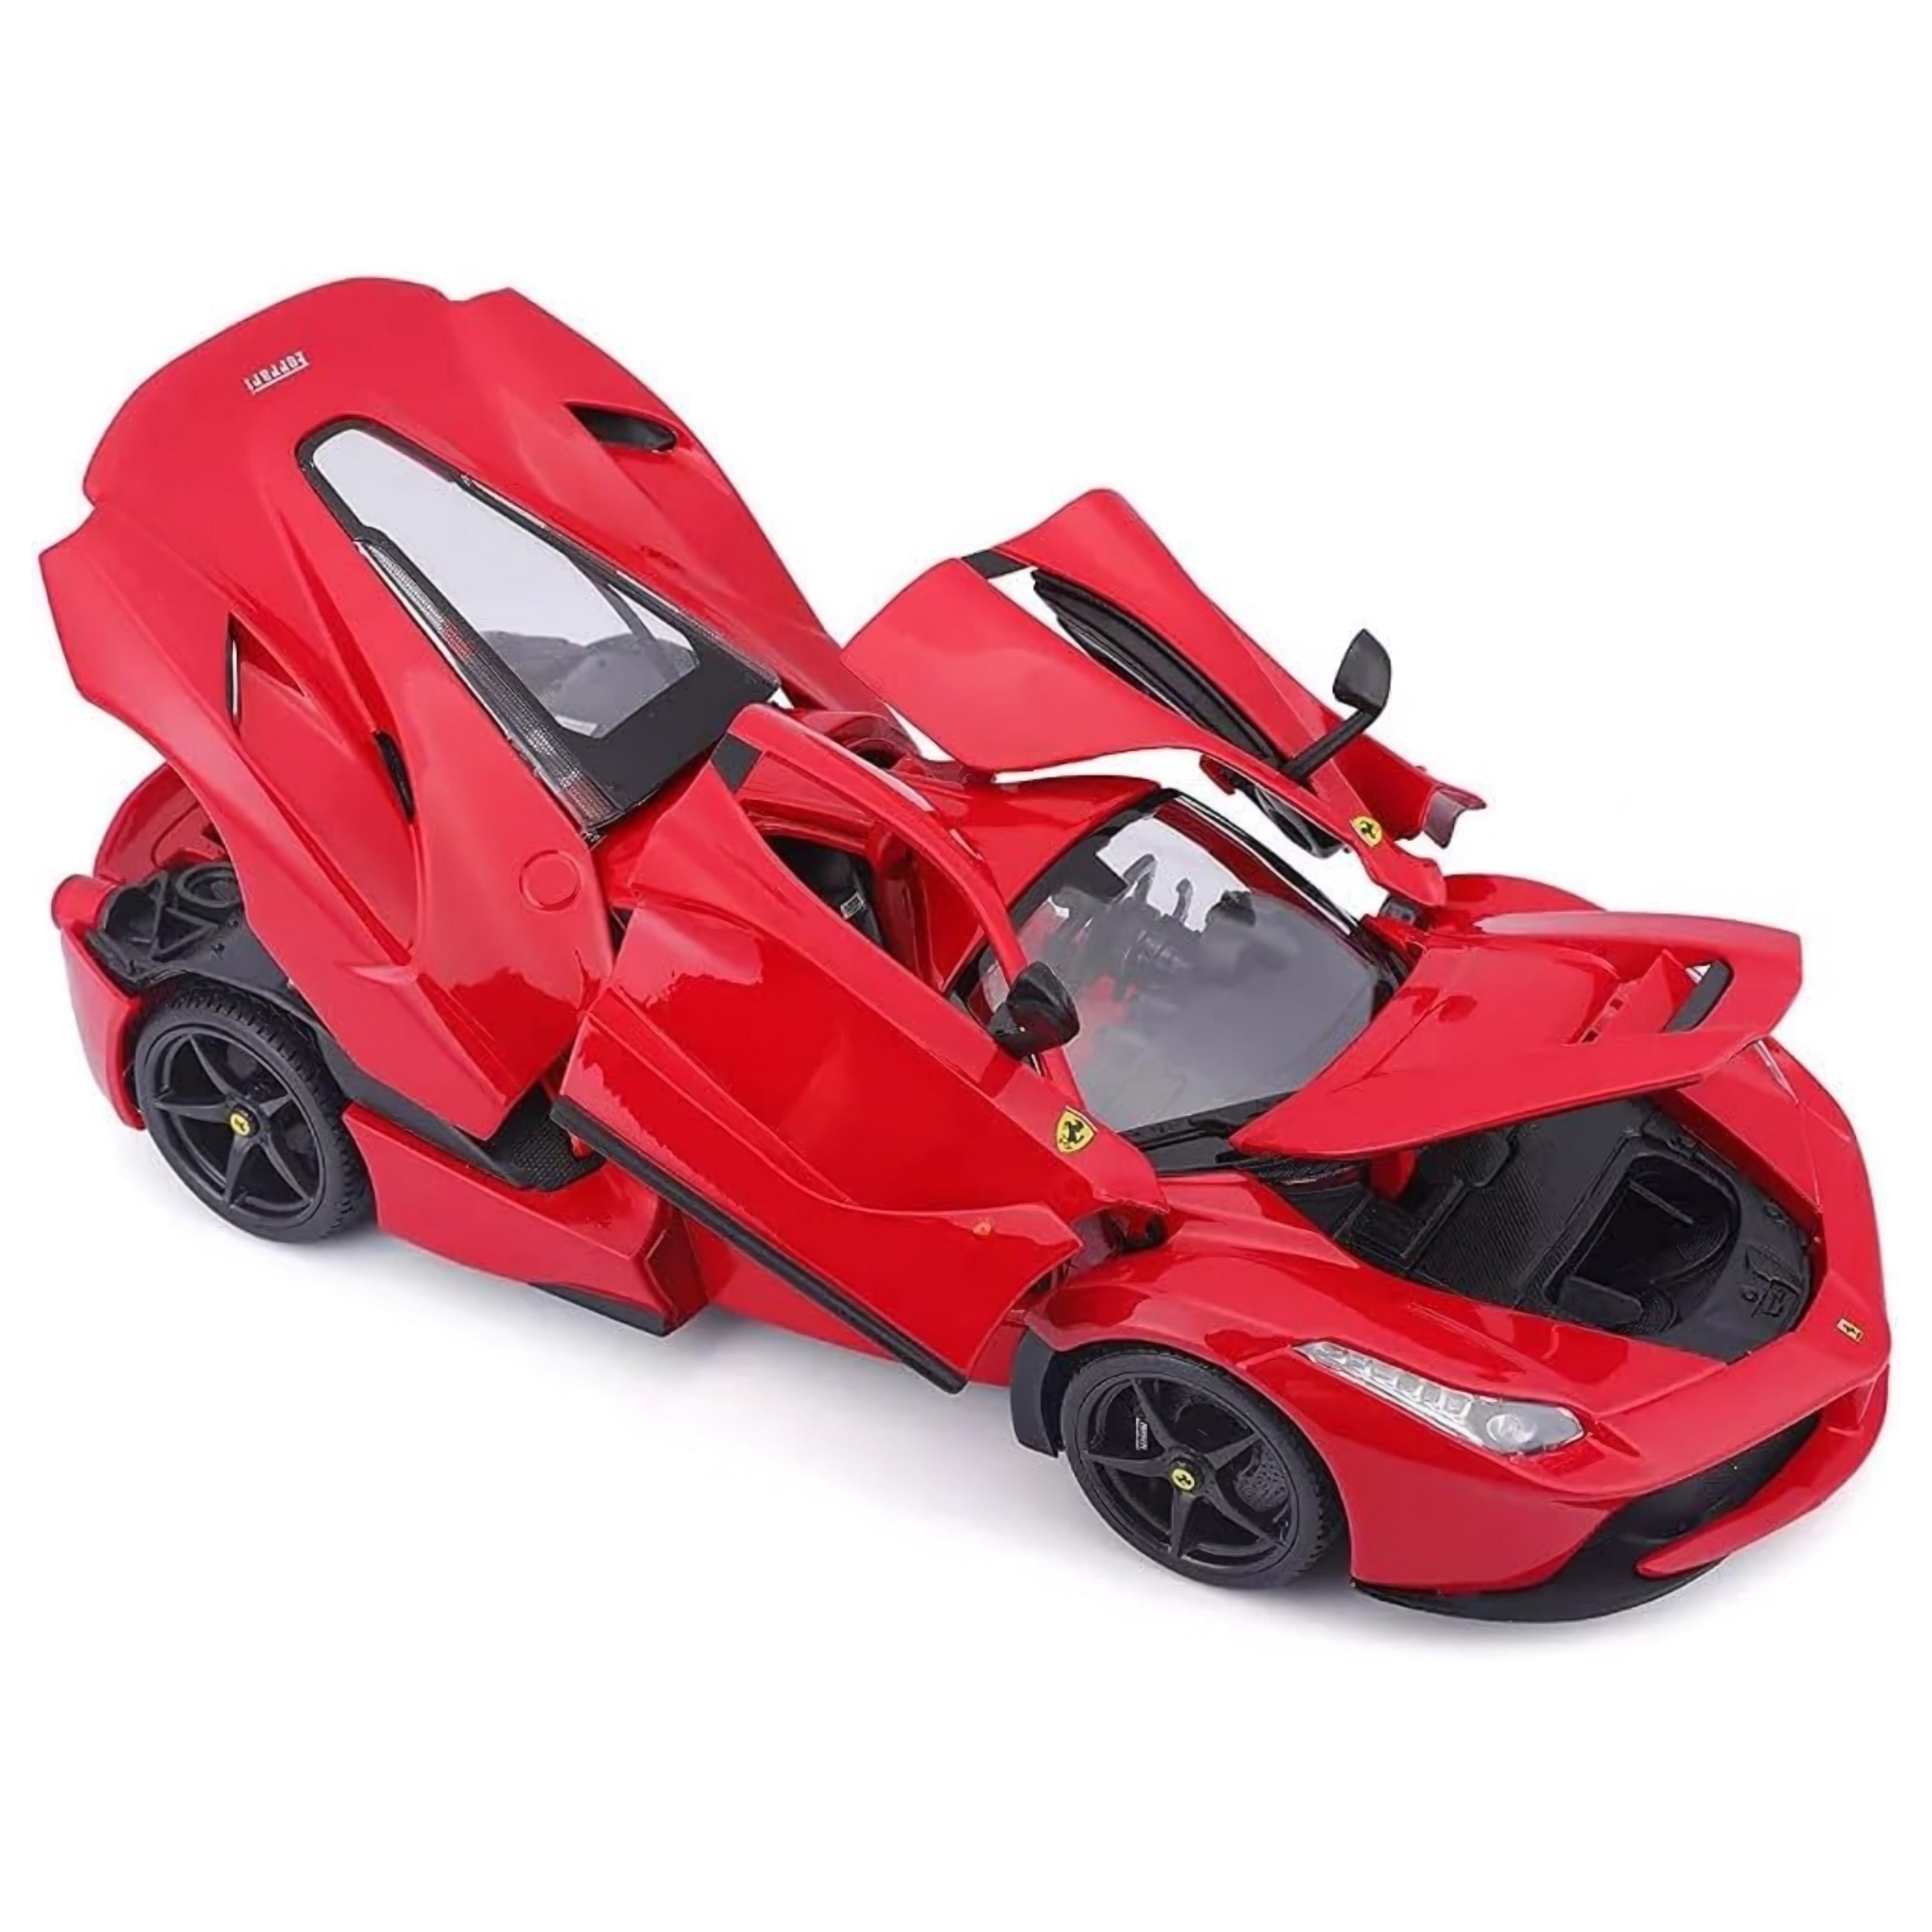 1:18 Scale Ferrari LaFerrari Die-Cast Model Car Genuine authorization - PANSEKtoy